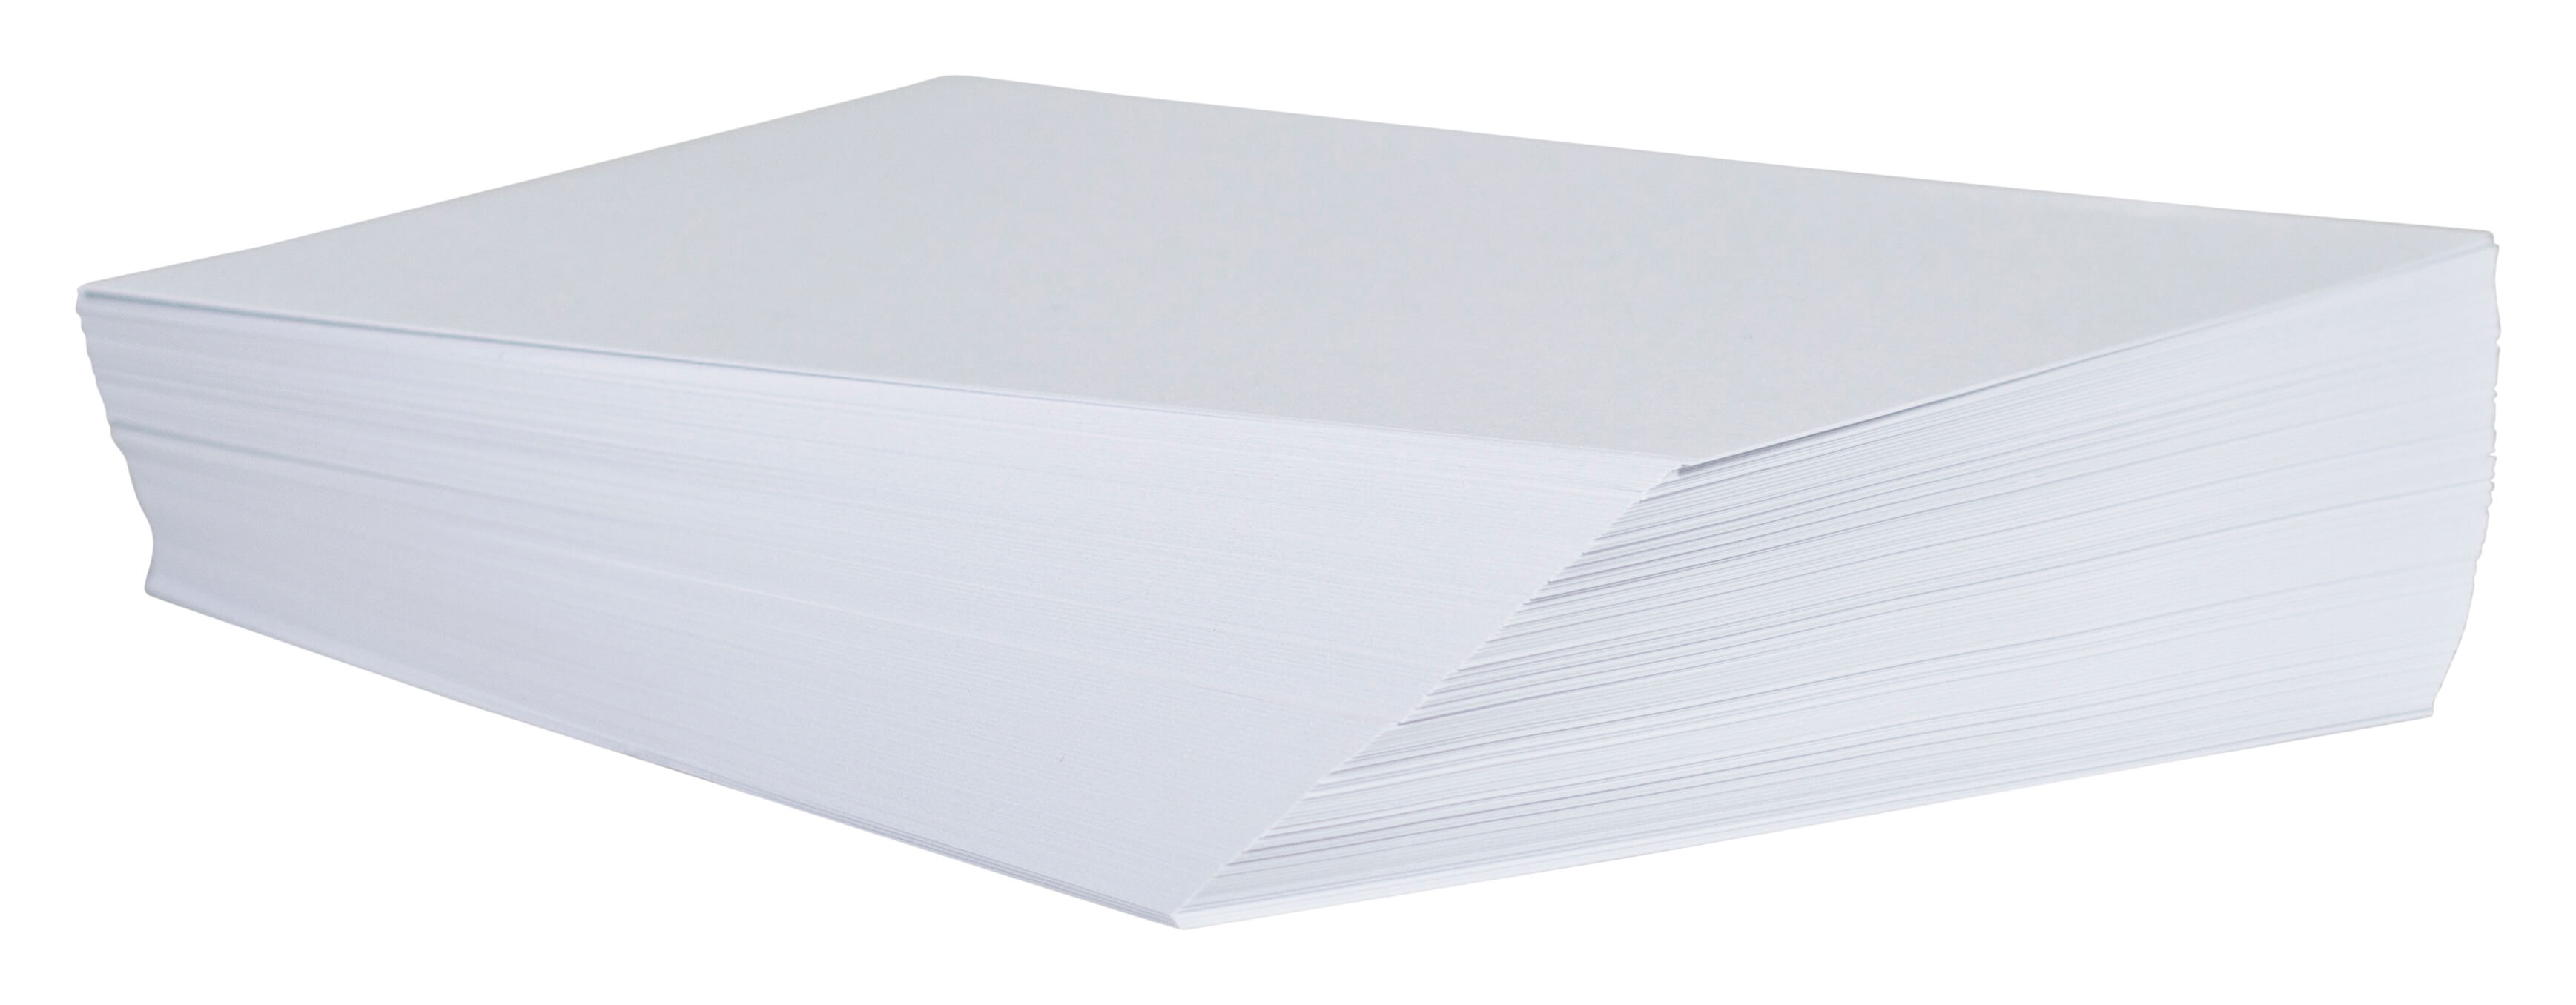 Copy paper, 80g, white - 500 sheets